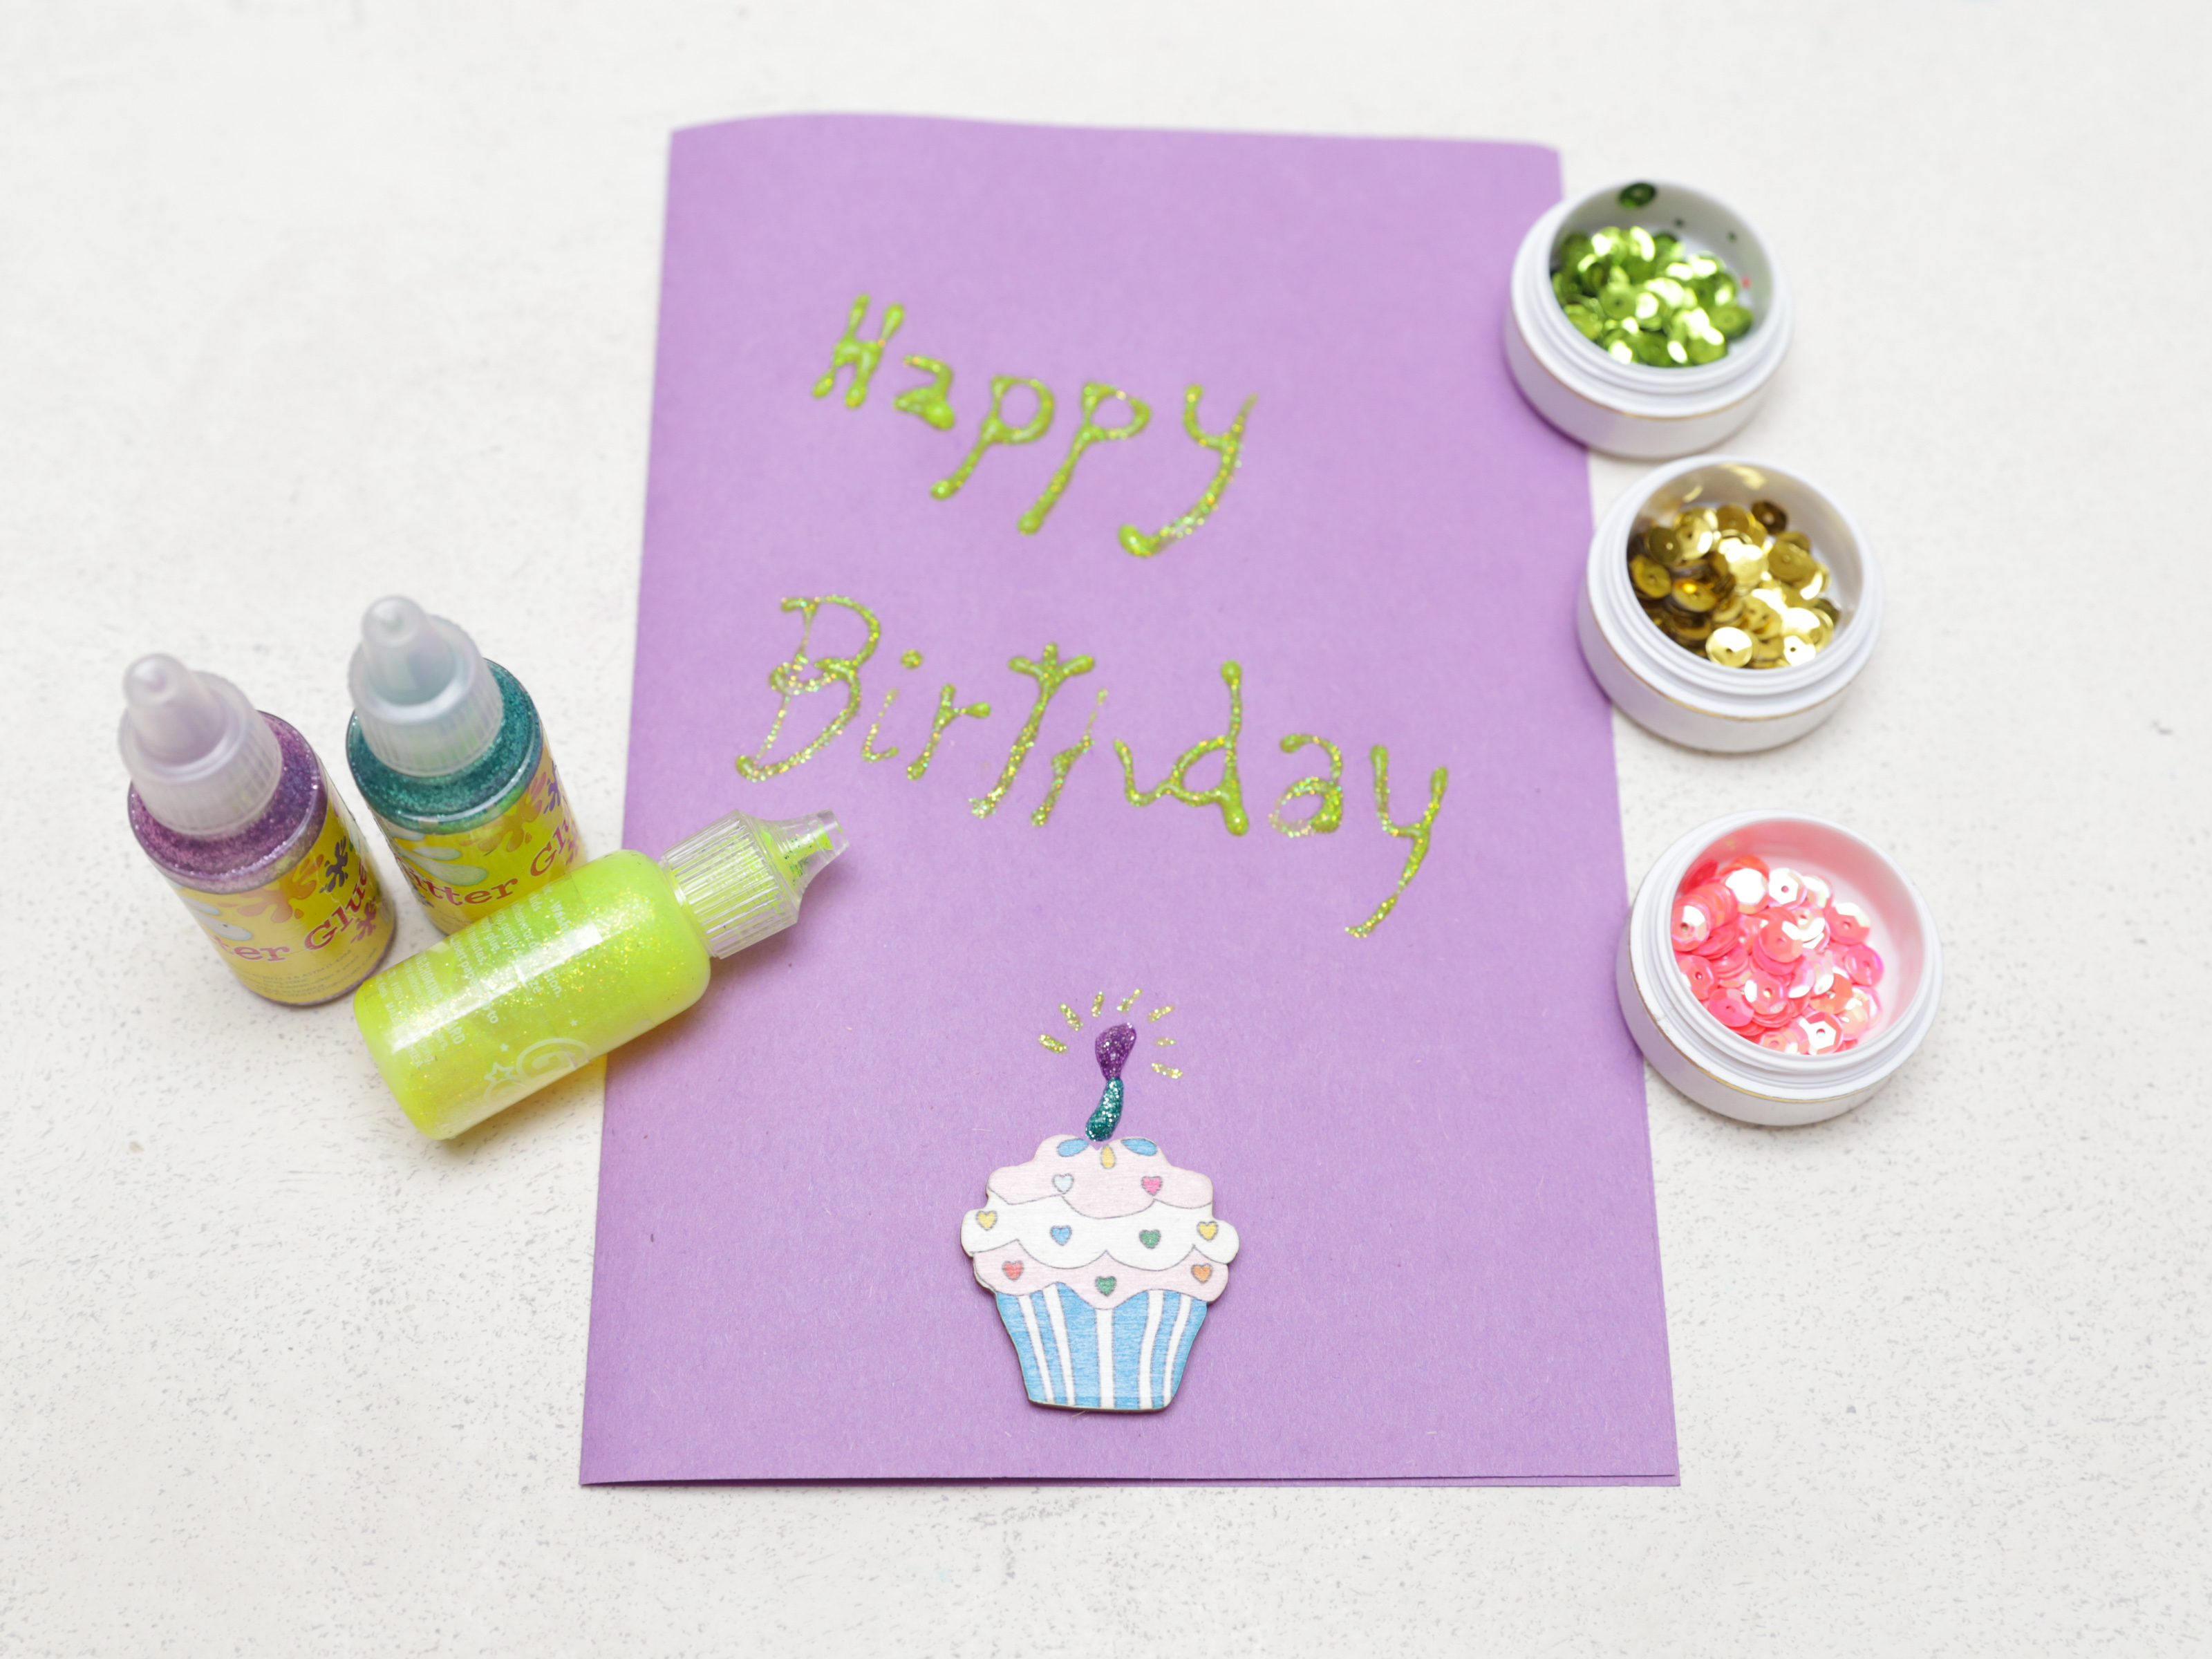 Handmade Birthday Card Ideas For Daughter How To Make A Simple Handmade Birthday Card 15 Steps